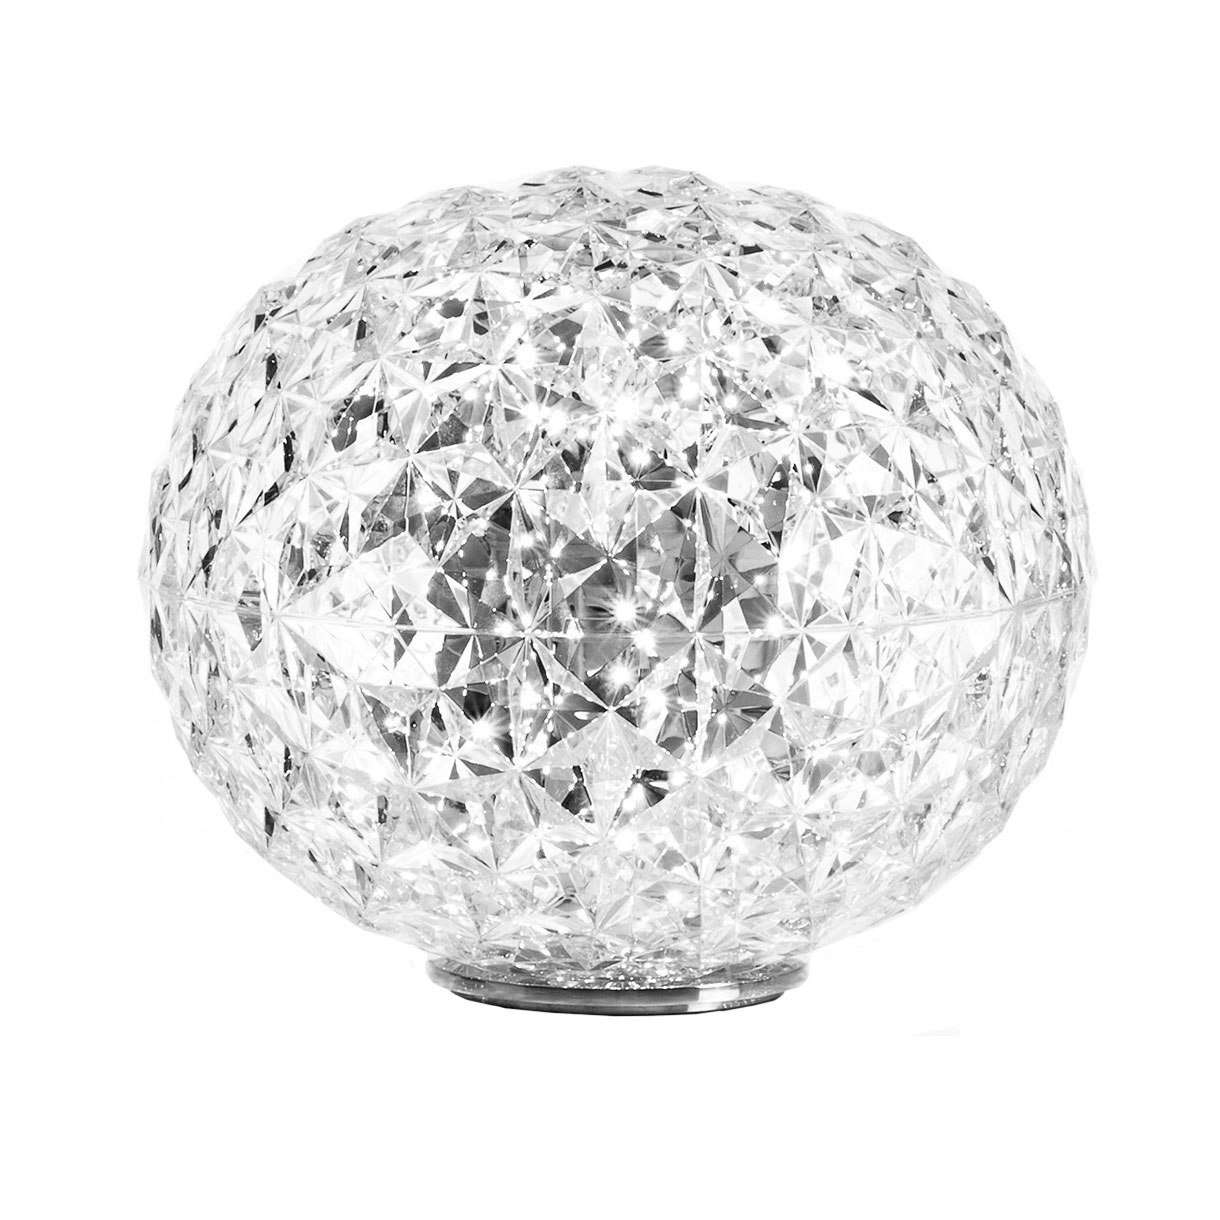 https://royaldesign.com/image/2/kartell-planet-table-lamp-led-33cm-crystal-0